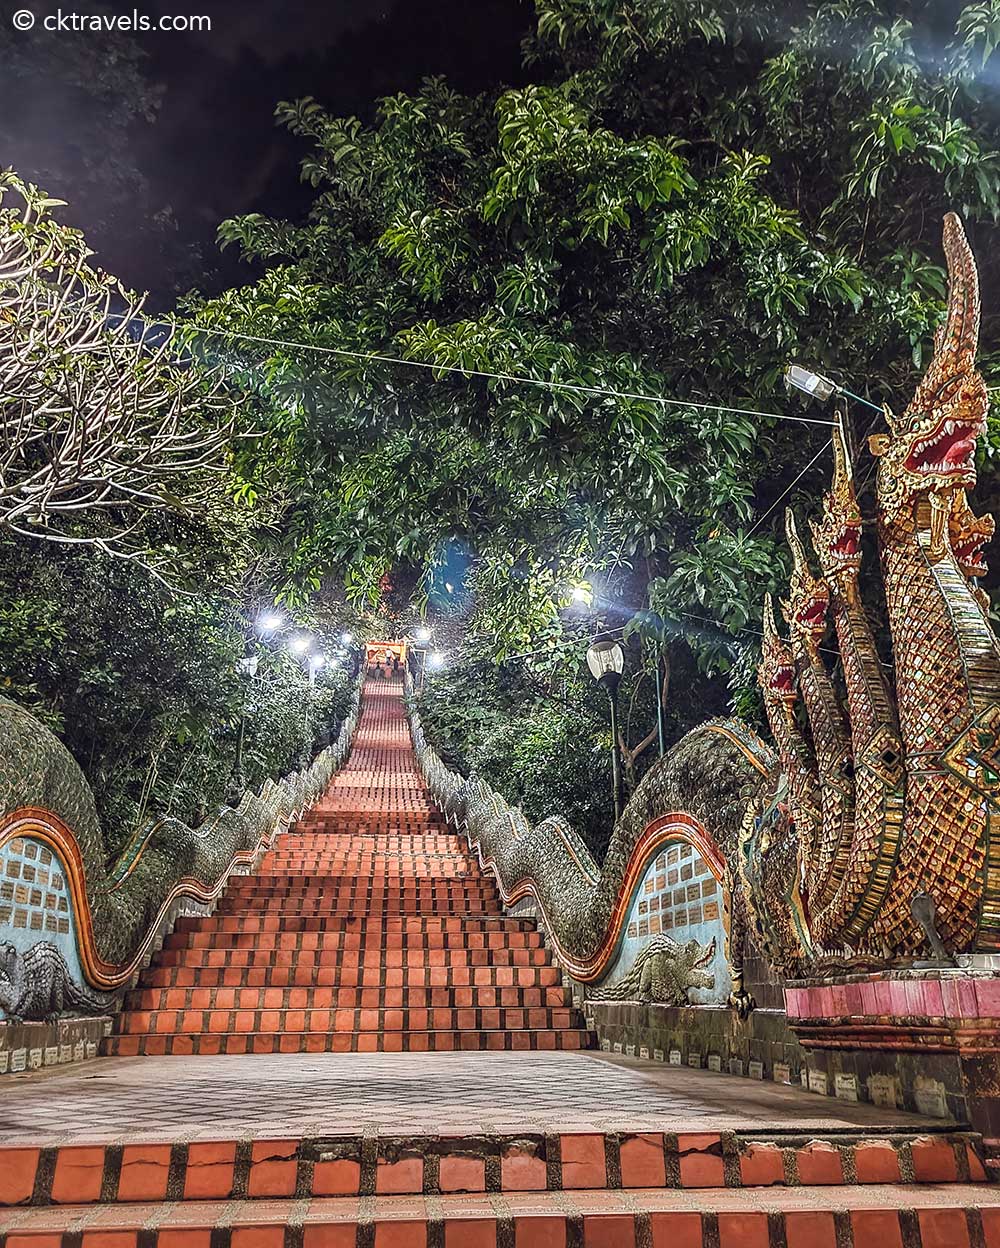 Doi Suthep temple in Chiang Mai